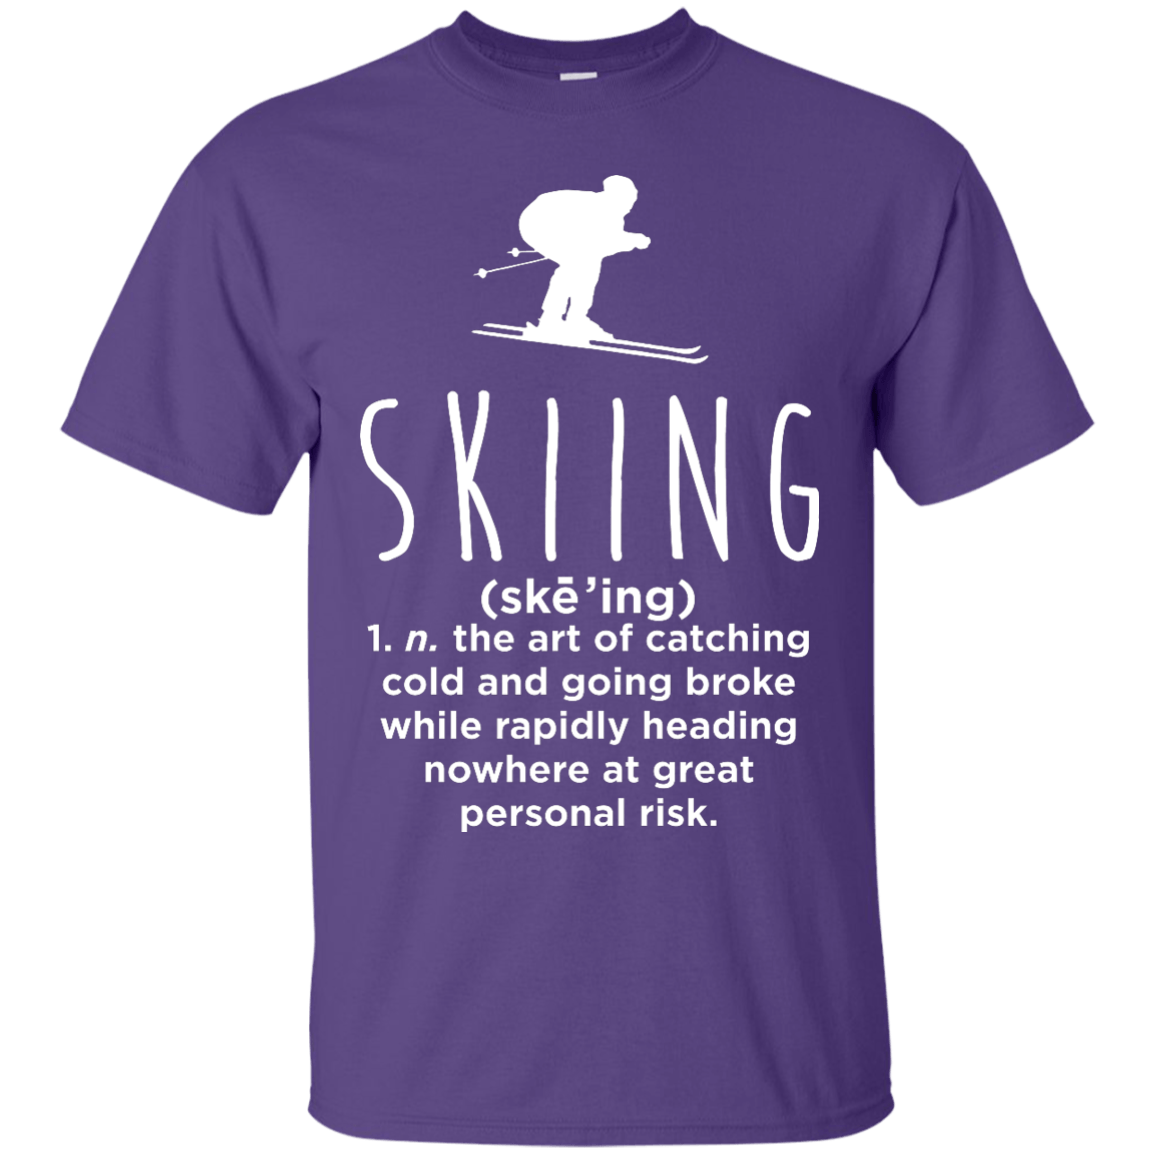 Skiing Definition Tees - Powderaddicts